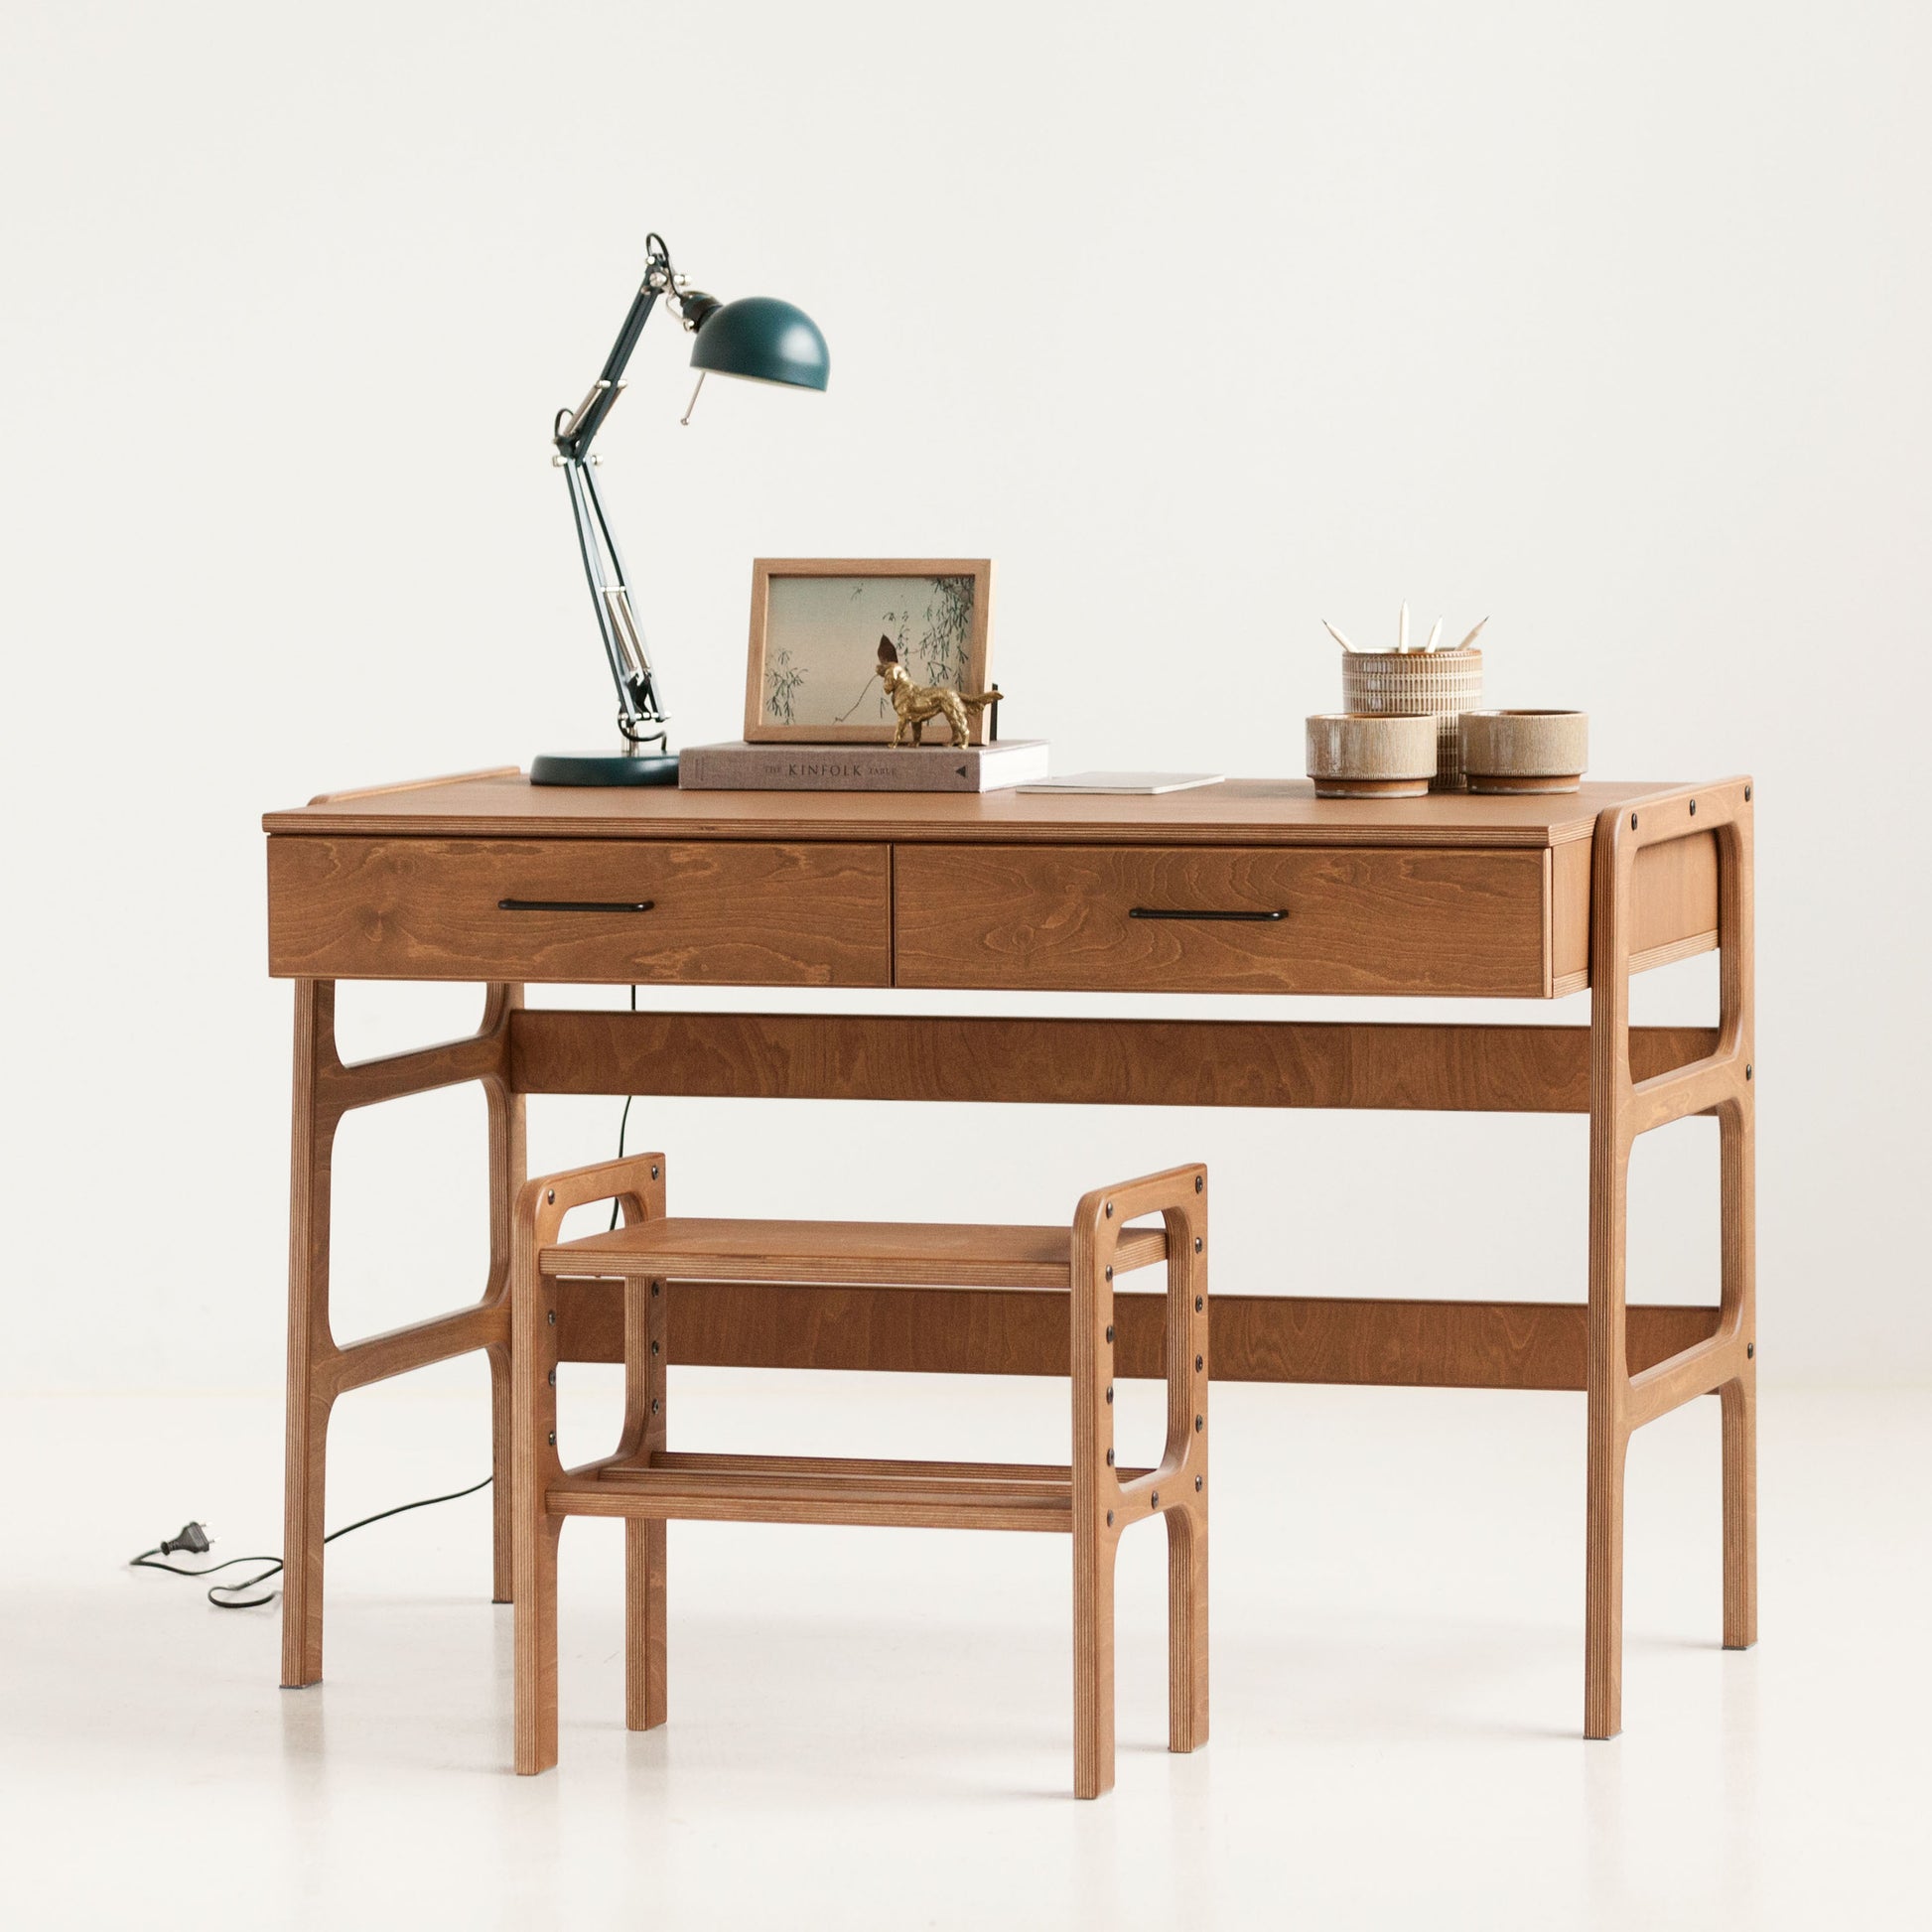 walnut-wooden-desk-handmade-in-mid-century-style